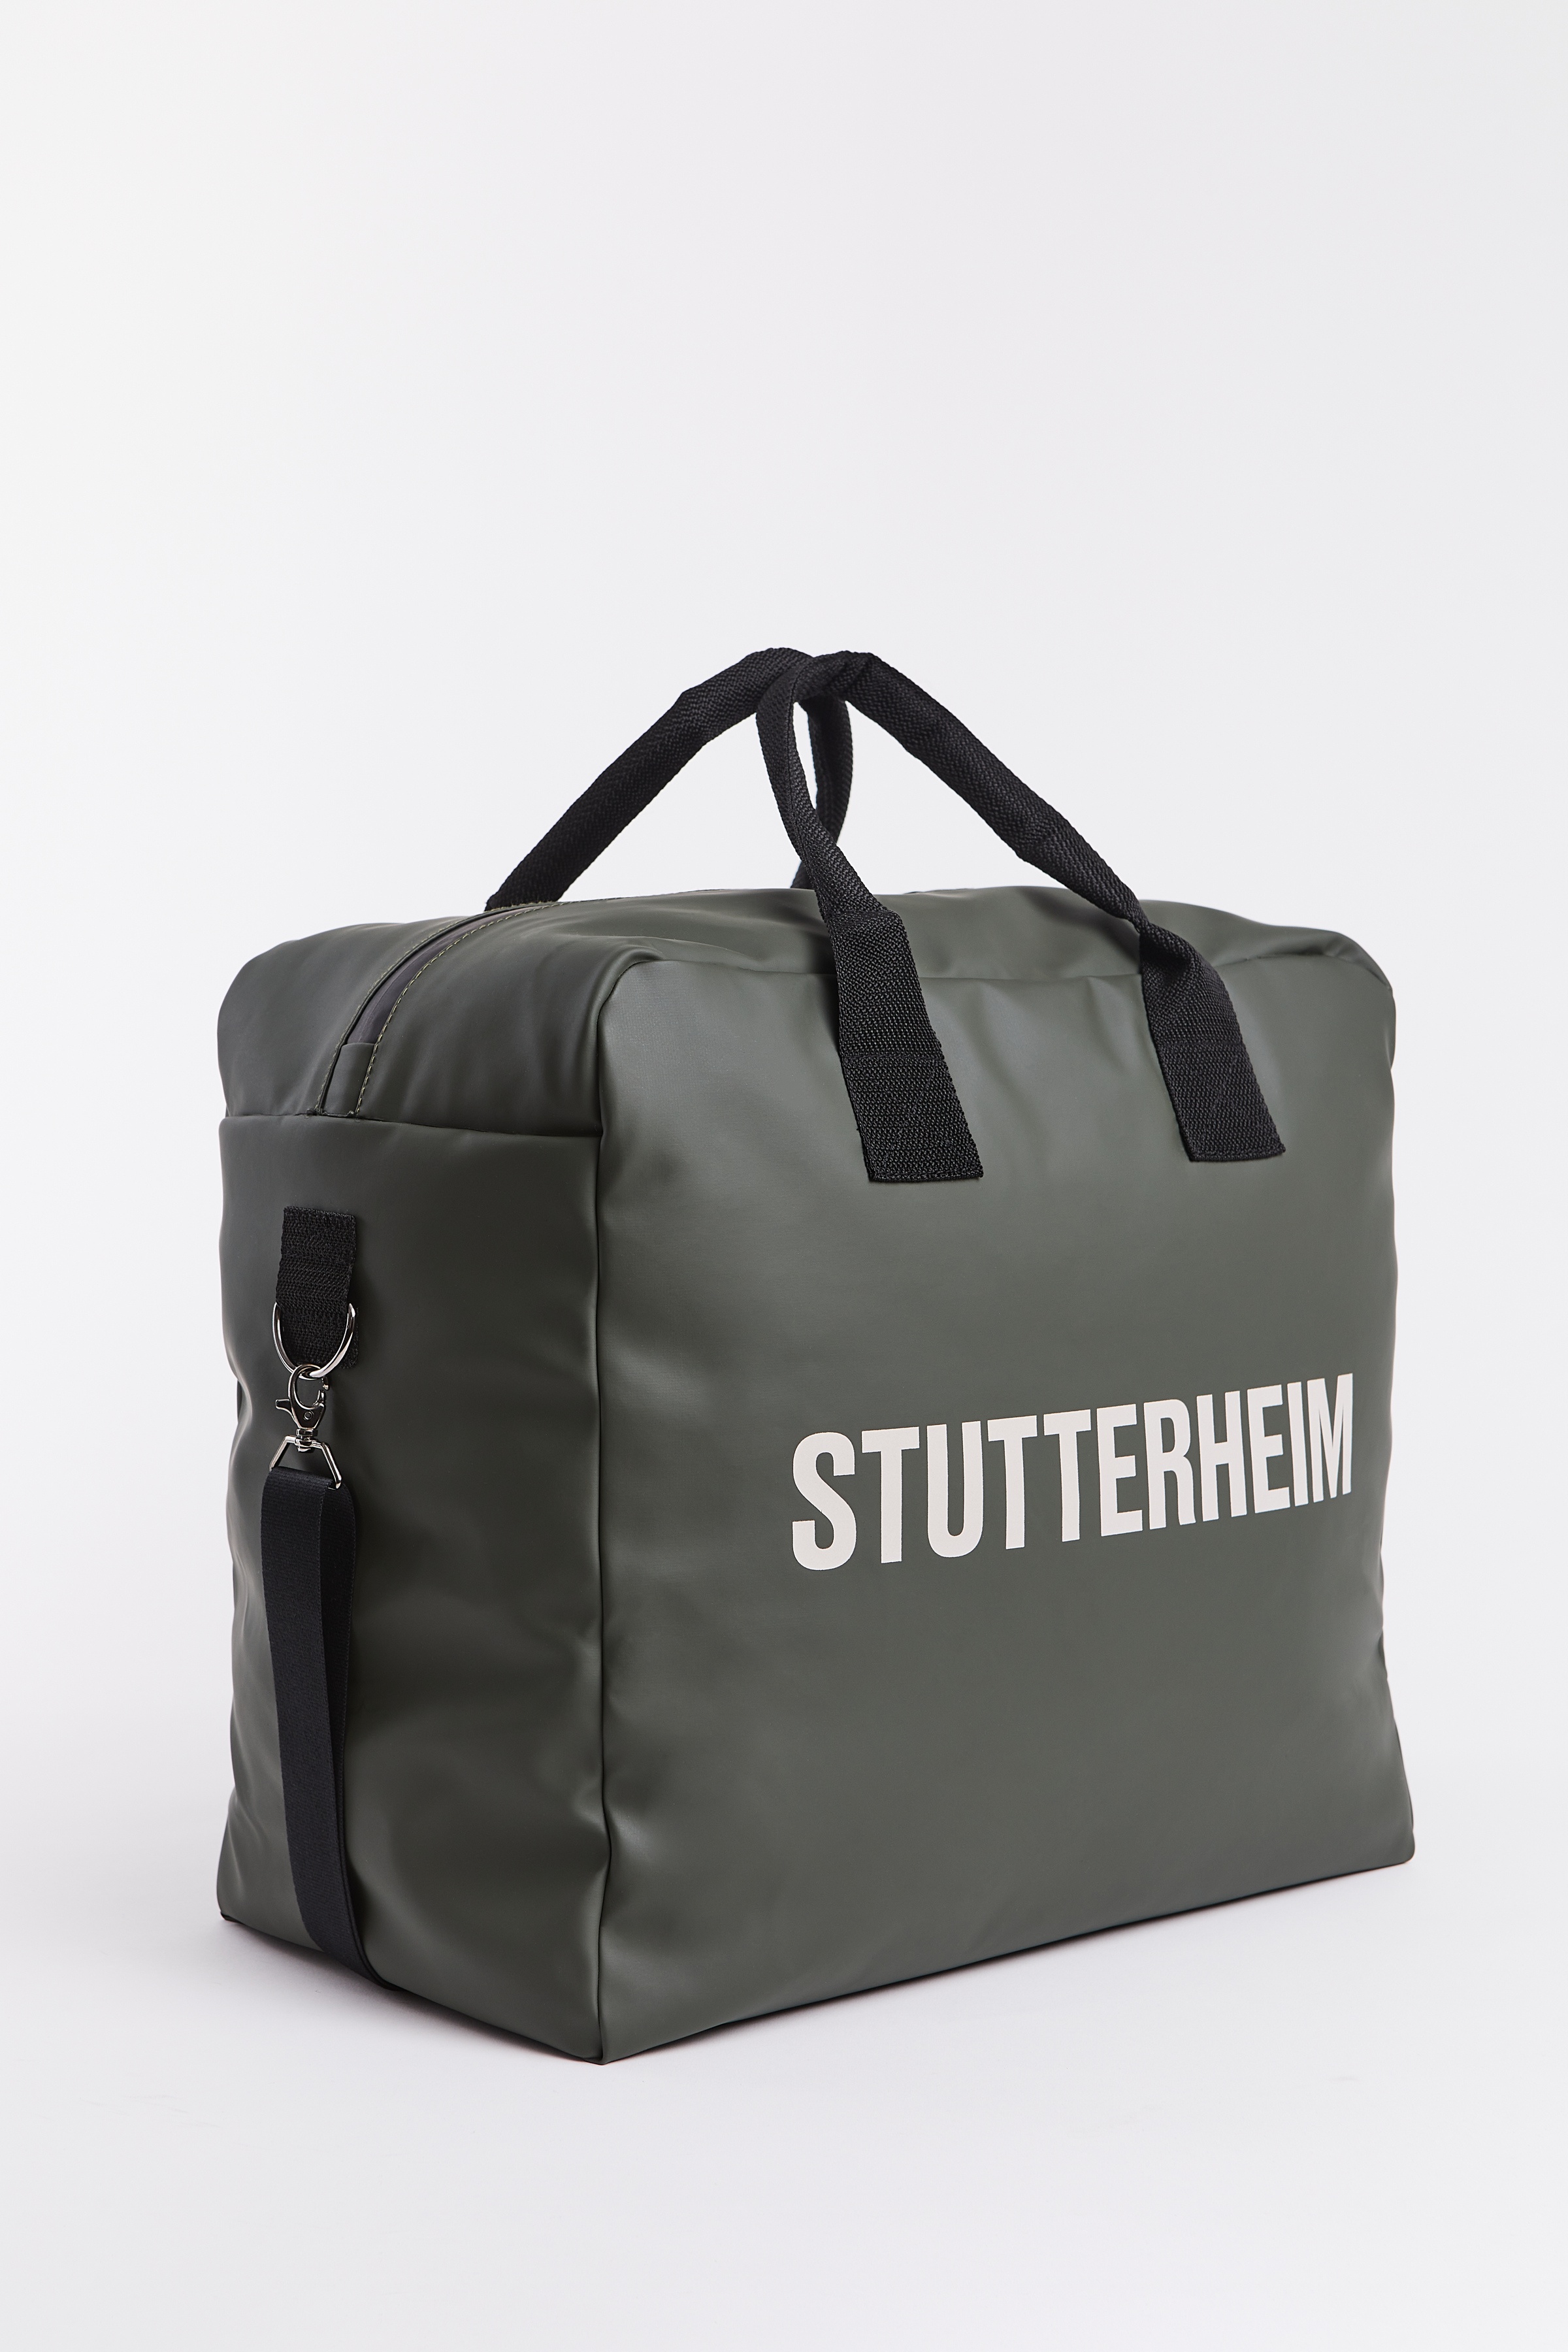 Svea Box Bag Green - 2